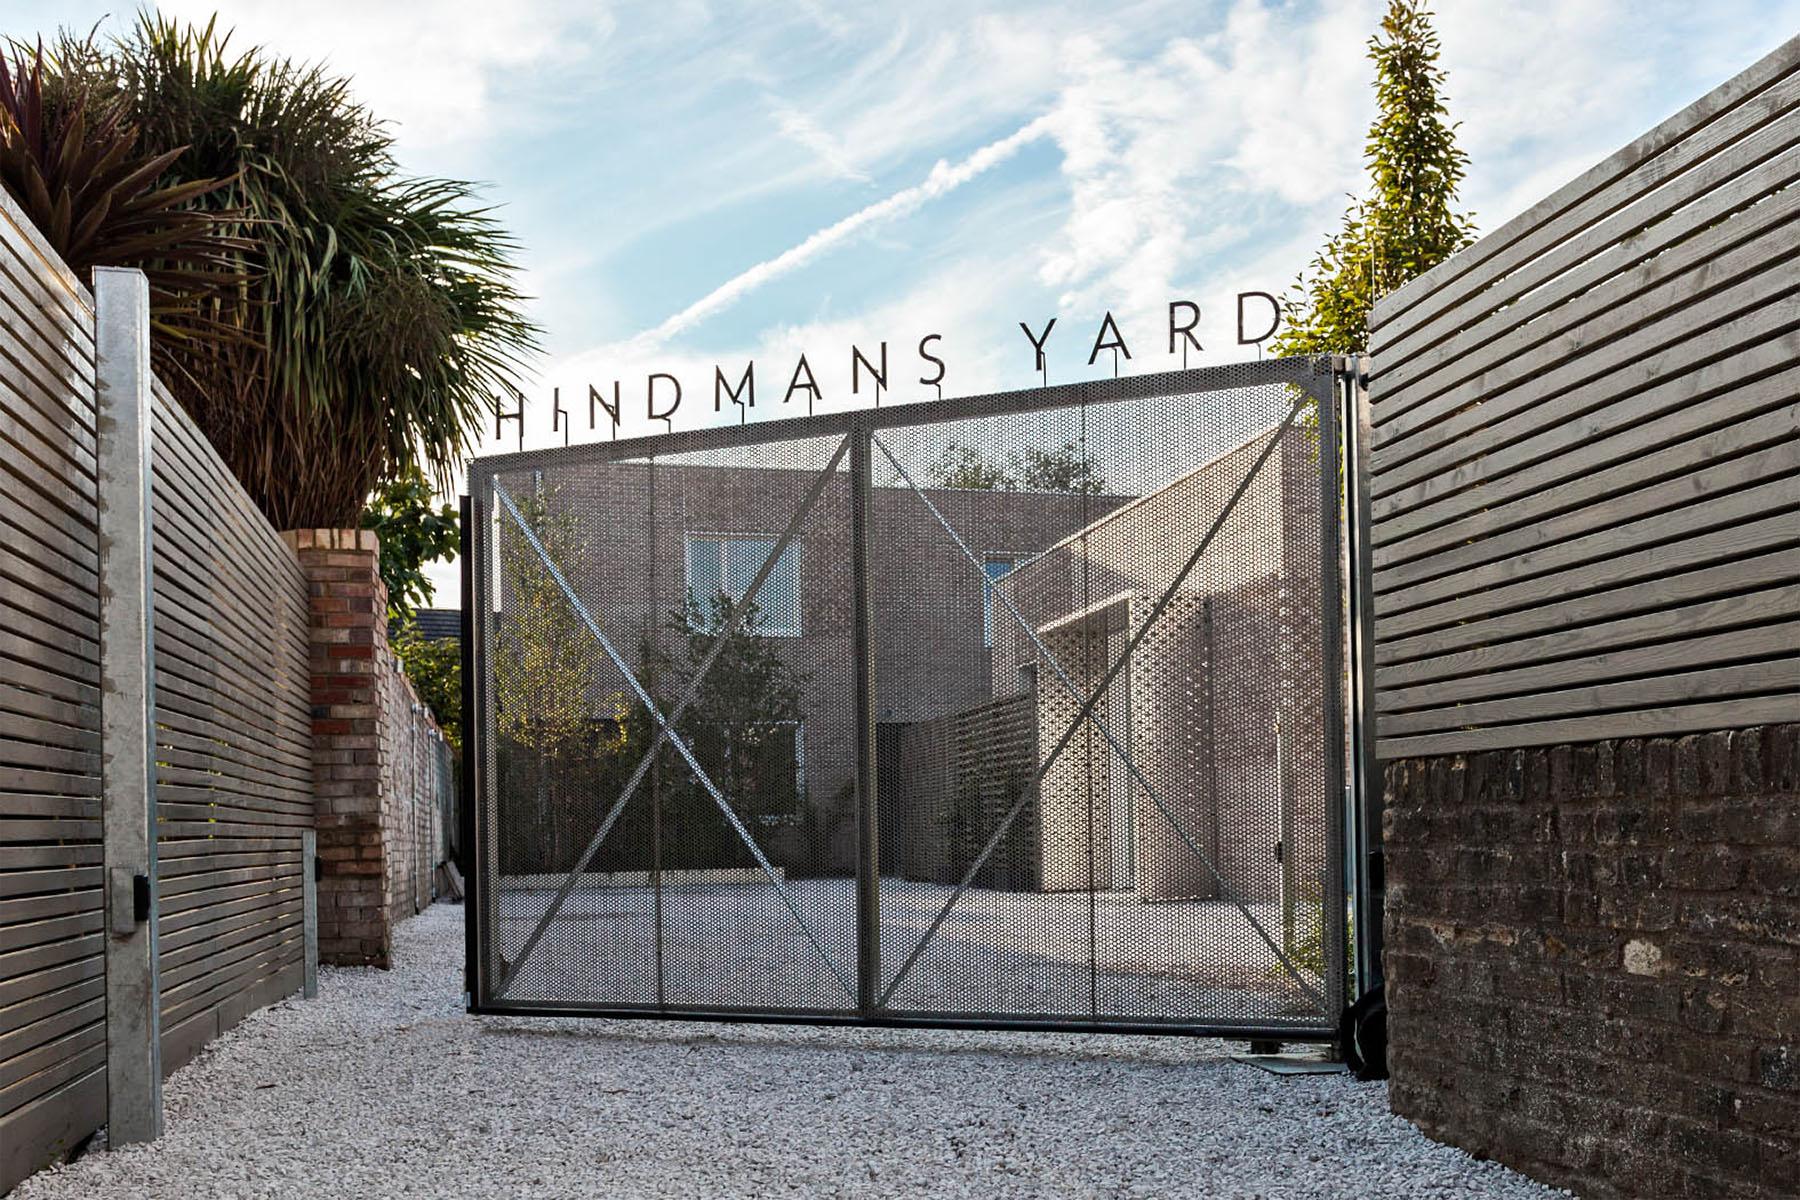 Hindmans Yard